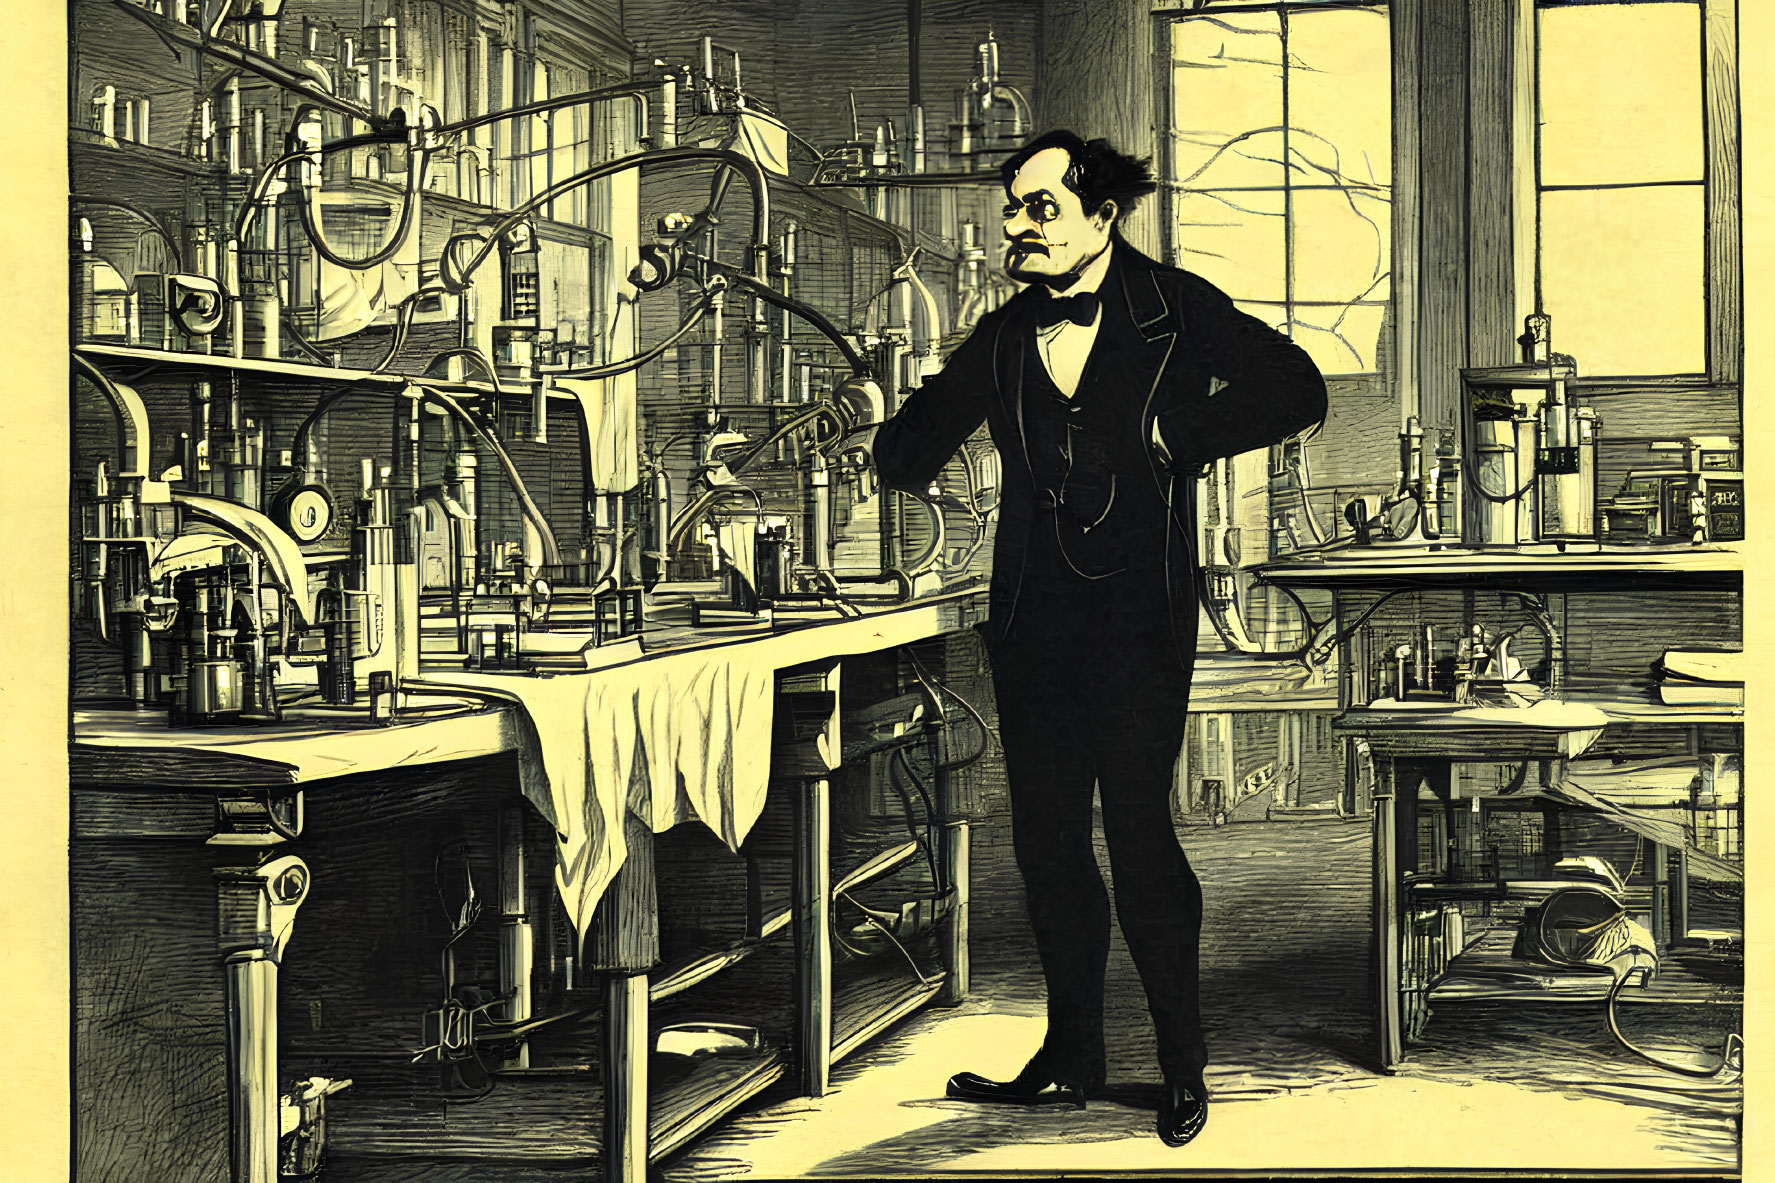 Victorian-era scientist in cluttered laboratory with mustache.